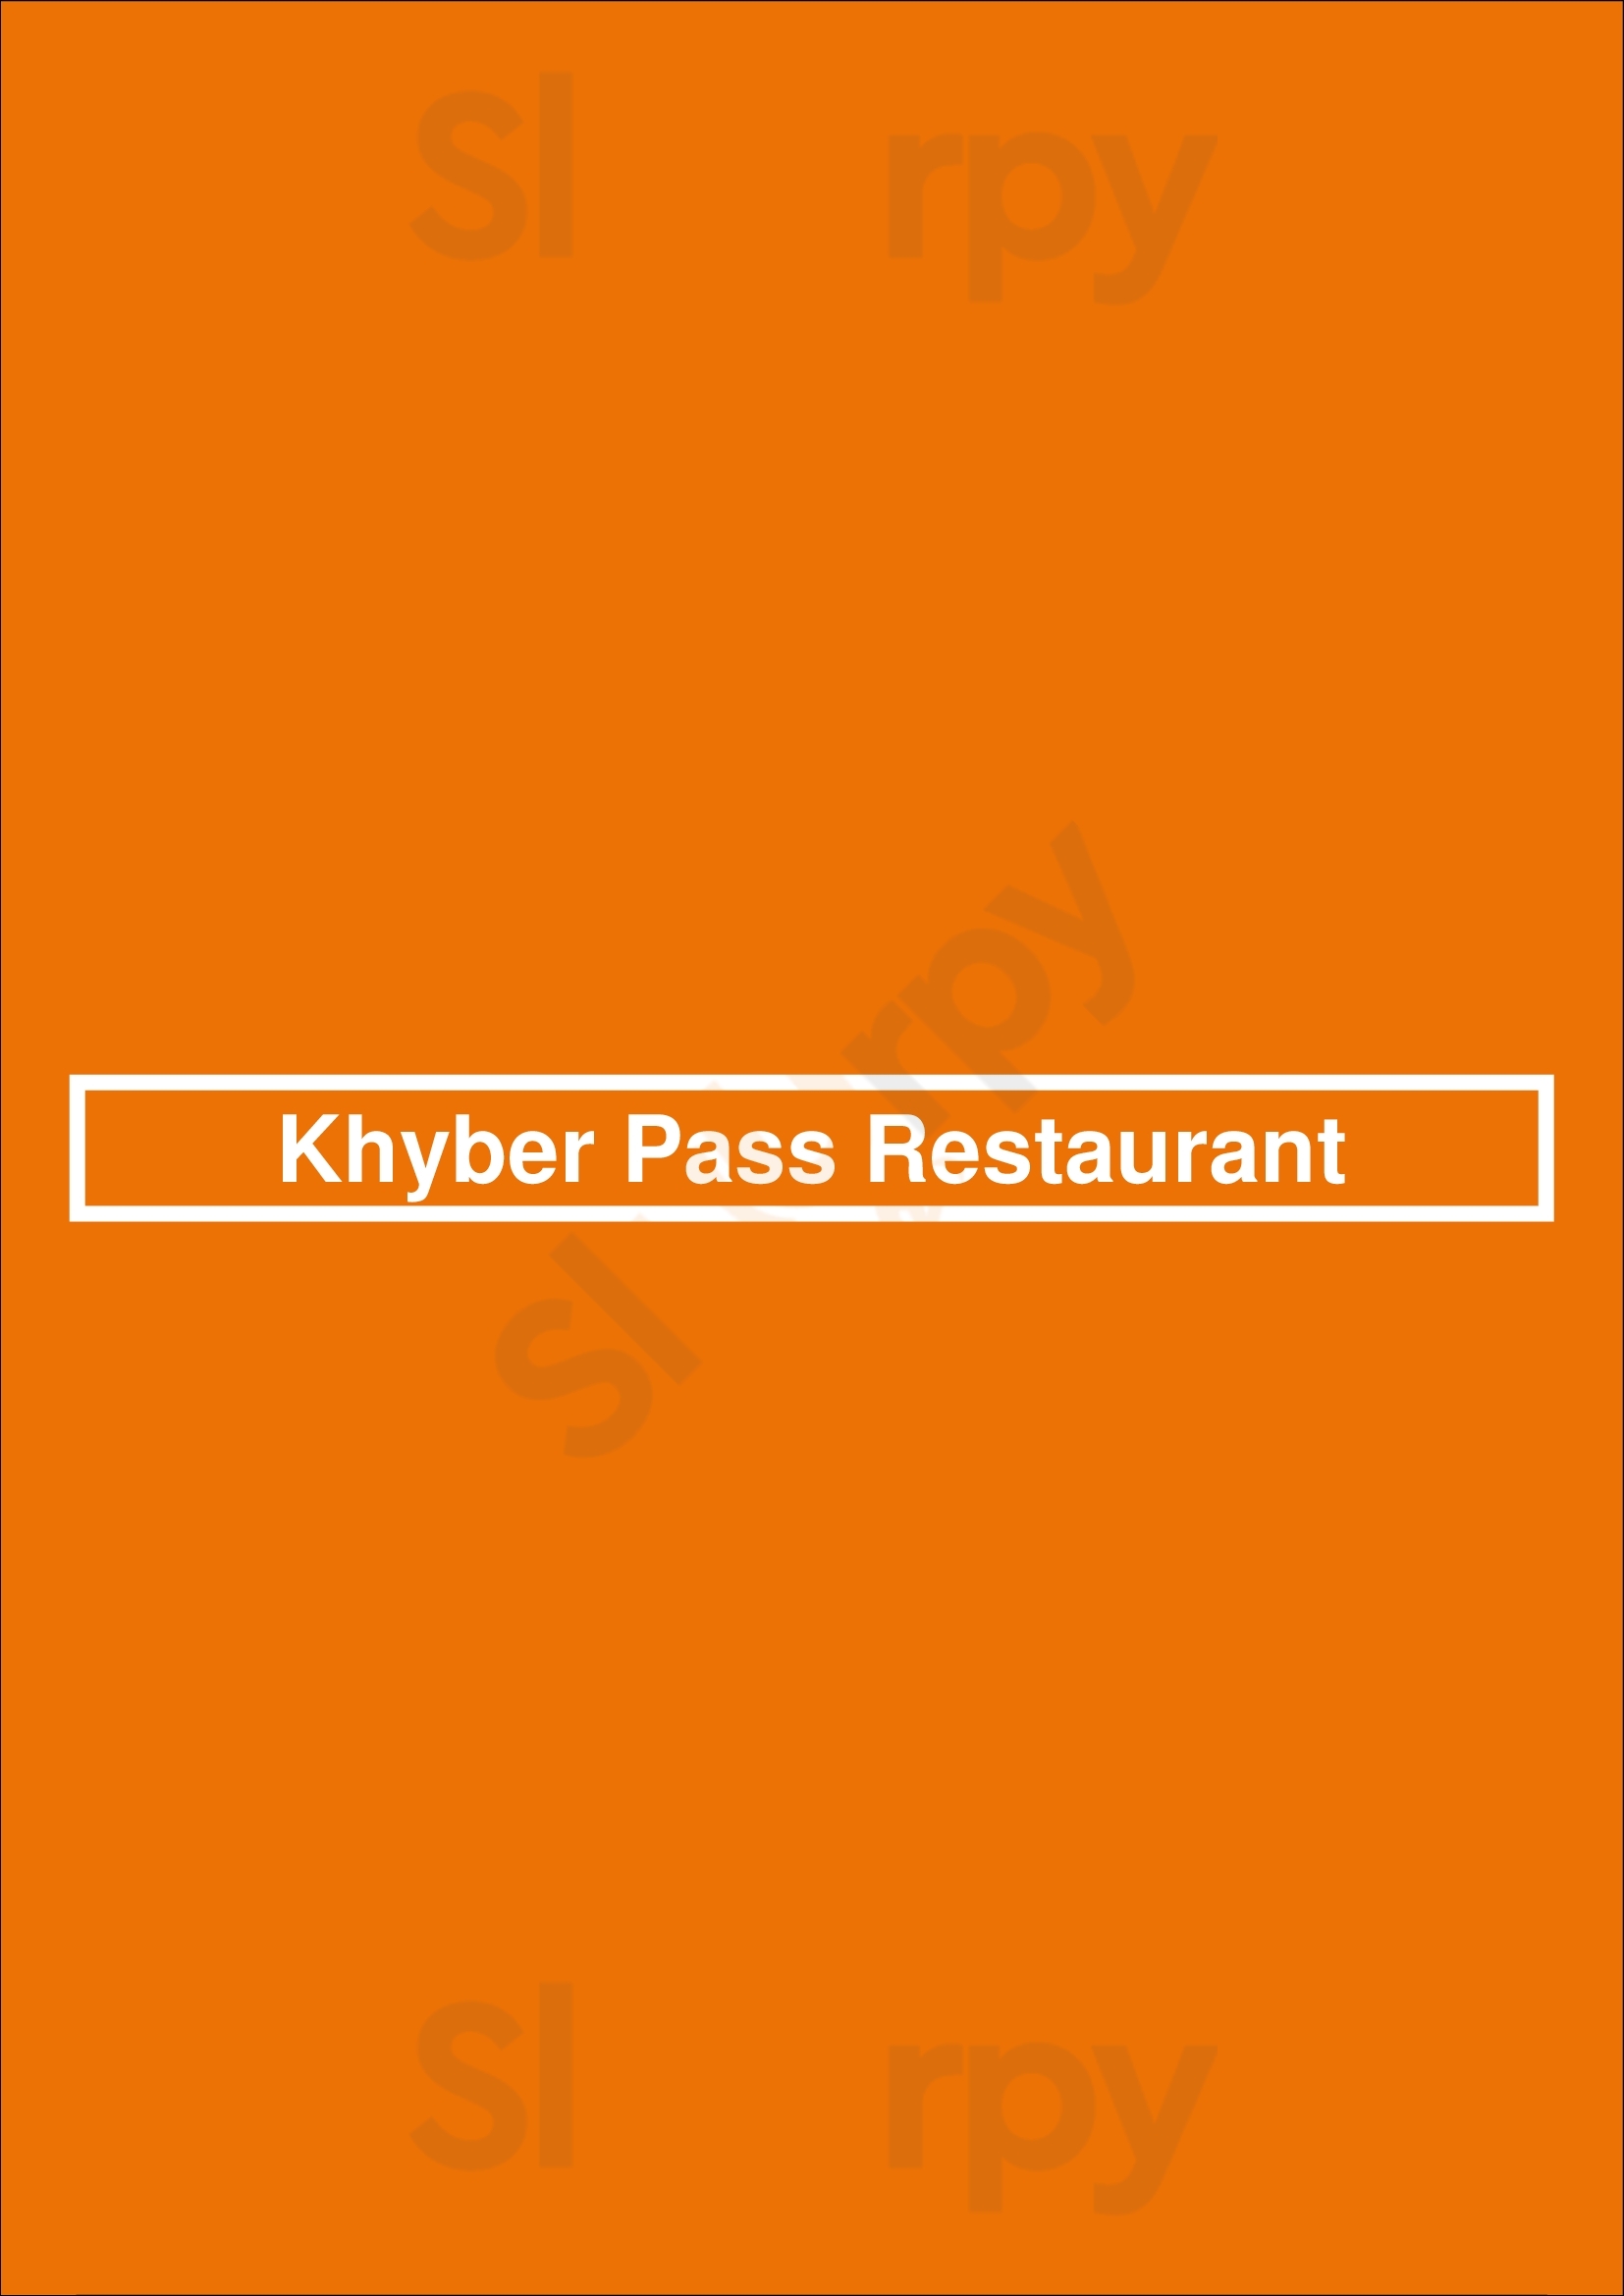 Khyber Pass Restaurant San Diego Menu - 1